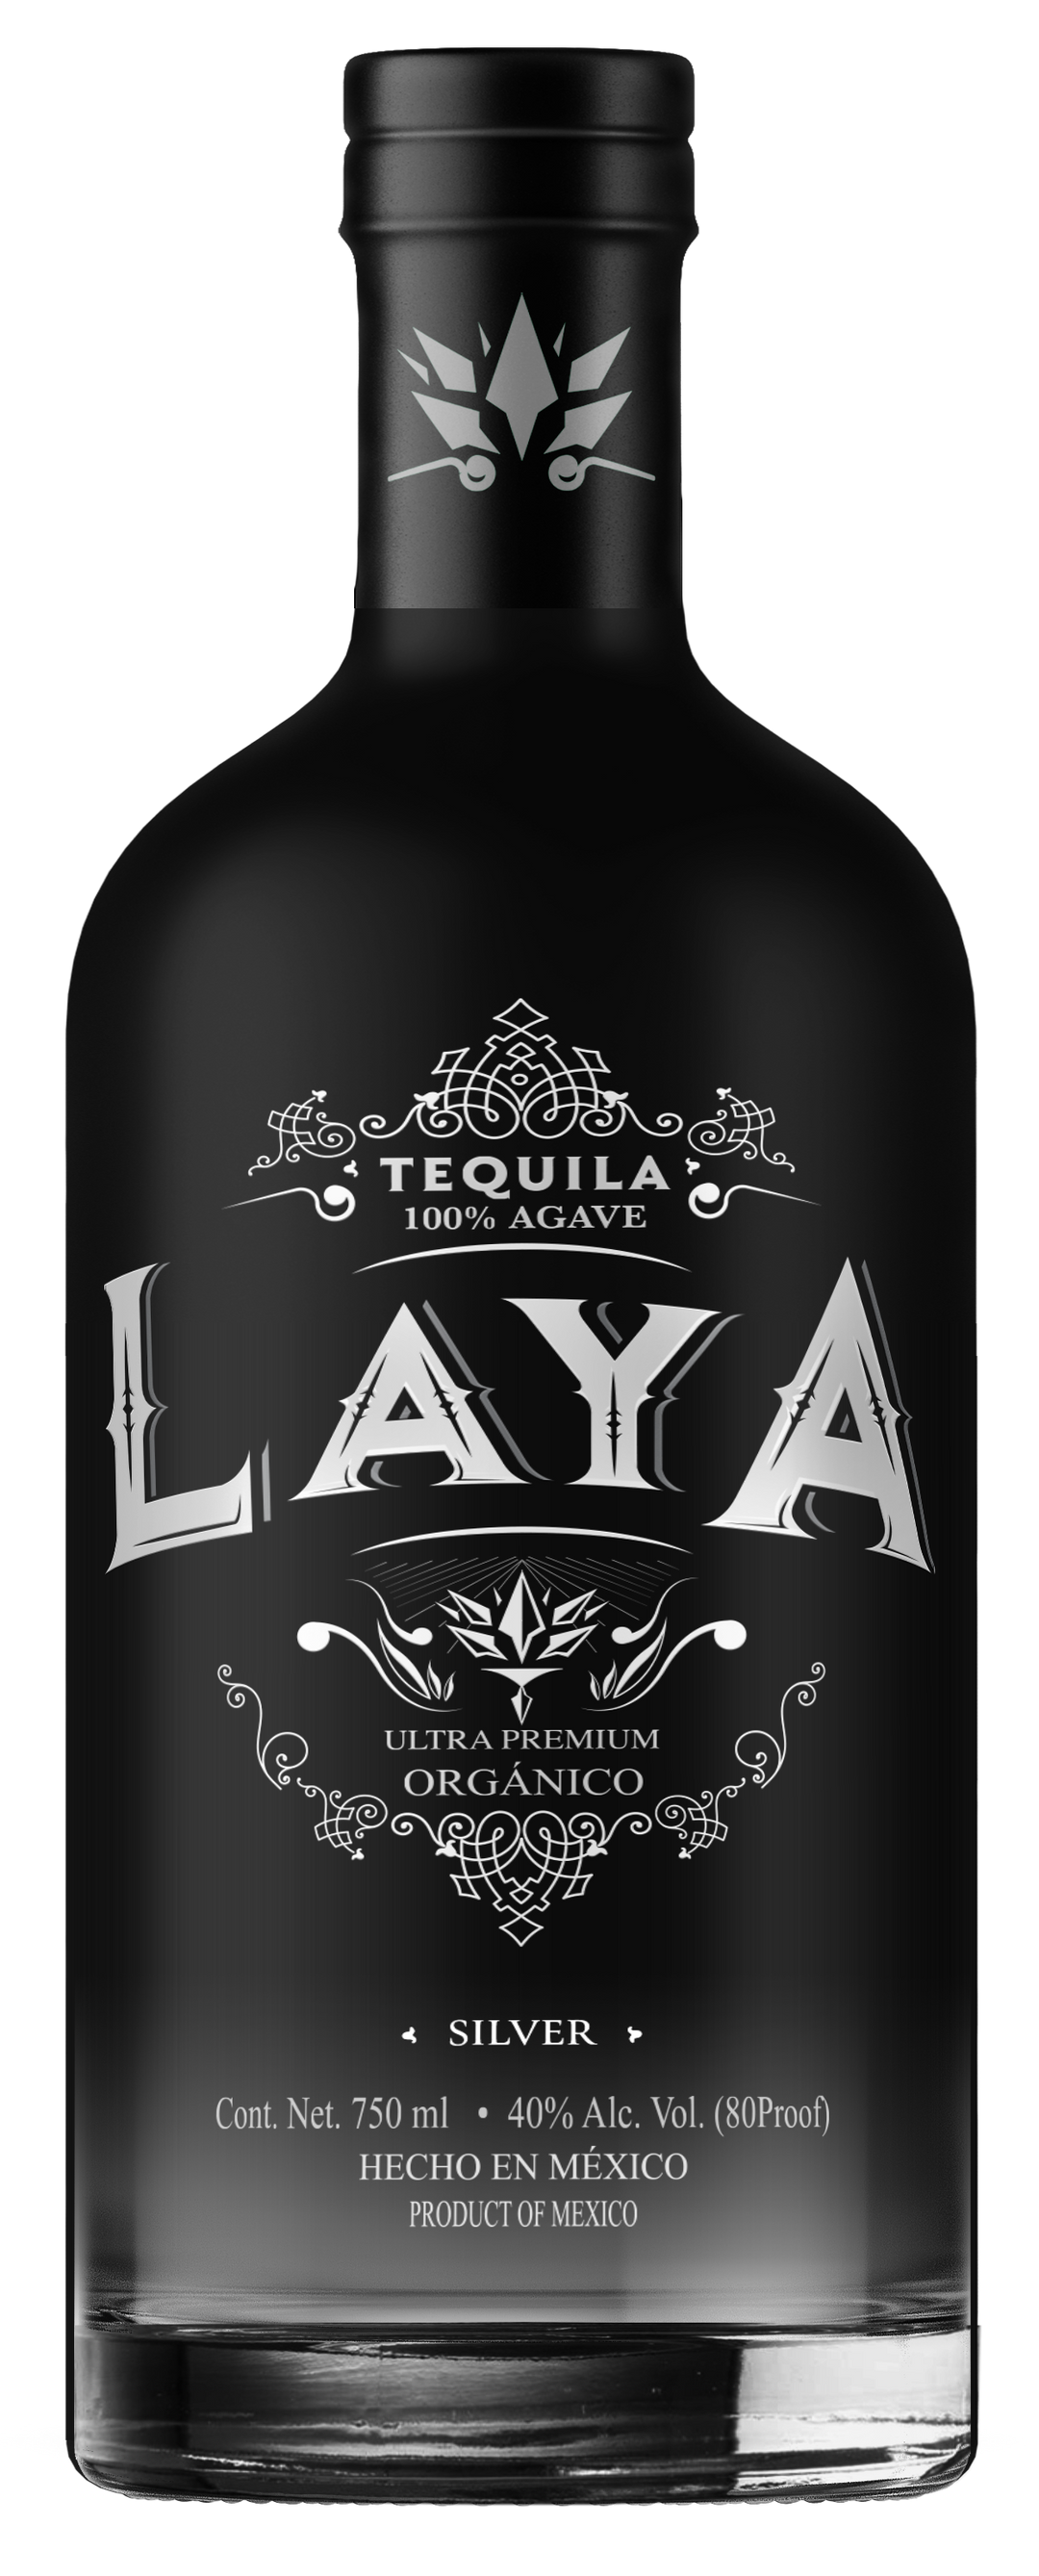 Laya Silver 750 ml